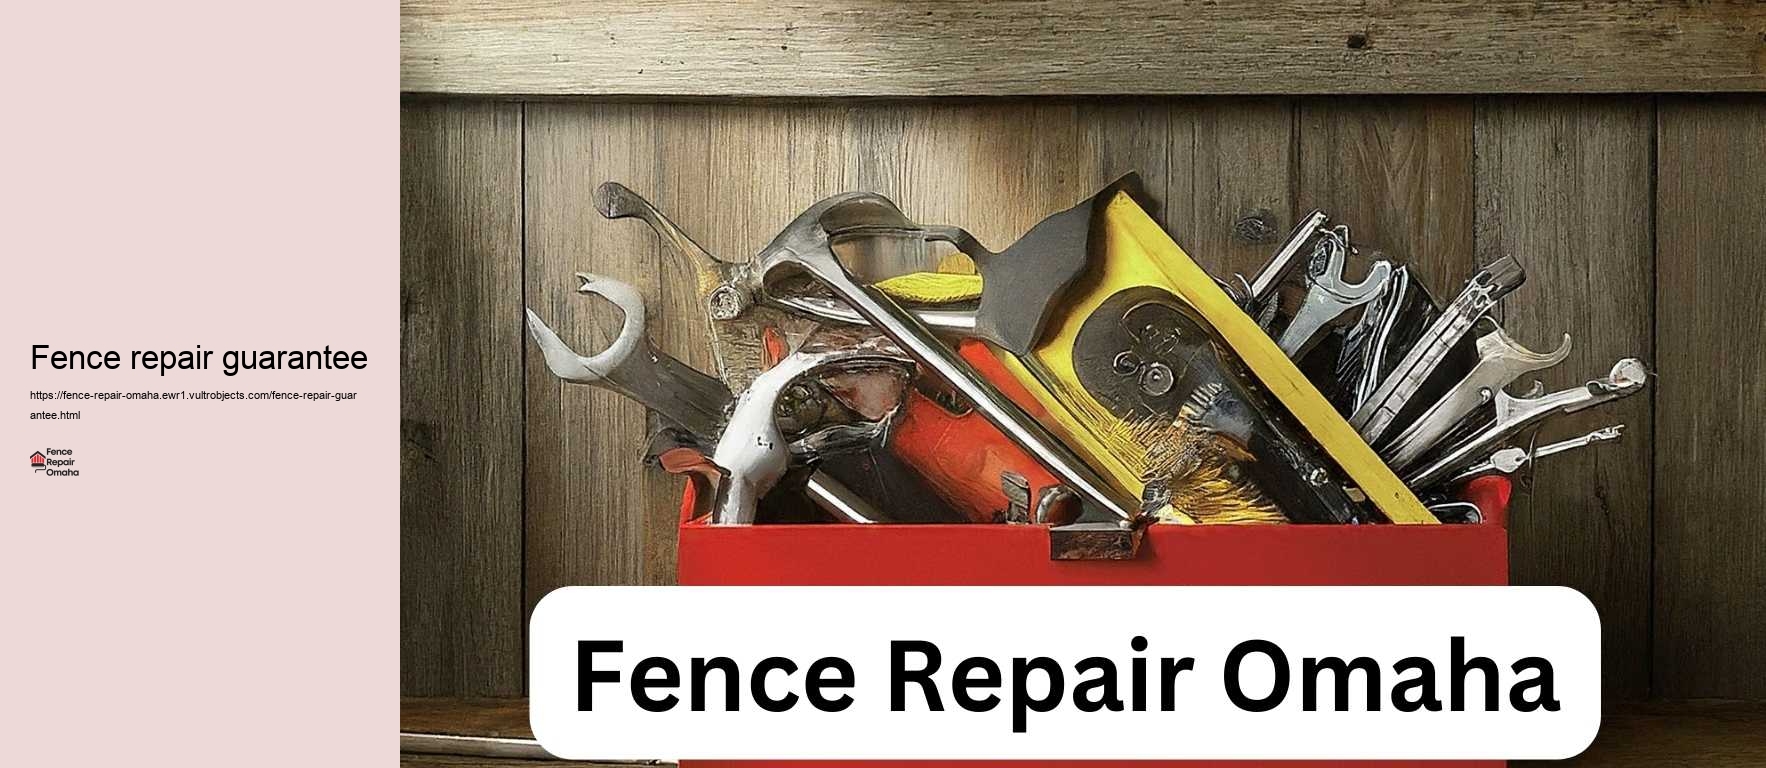 Fence repair guarantee